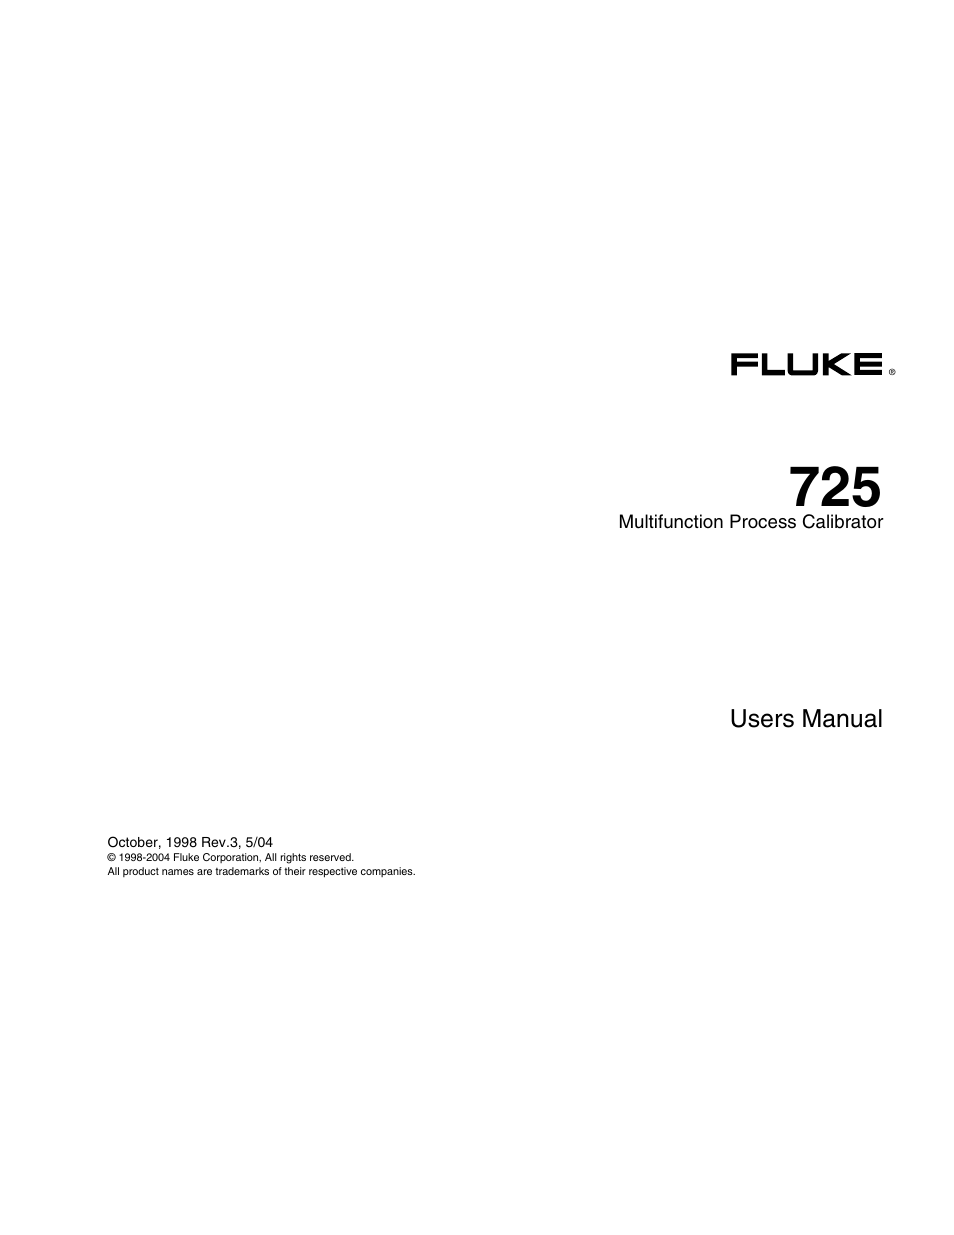 Fluke 725 User Manual | 72 pages